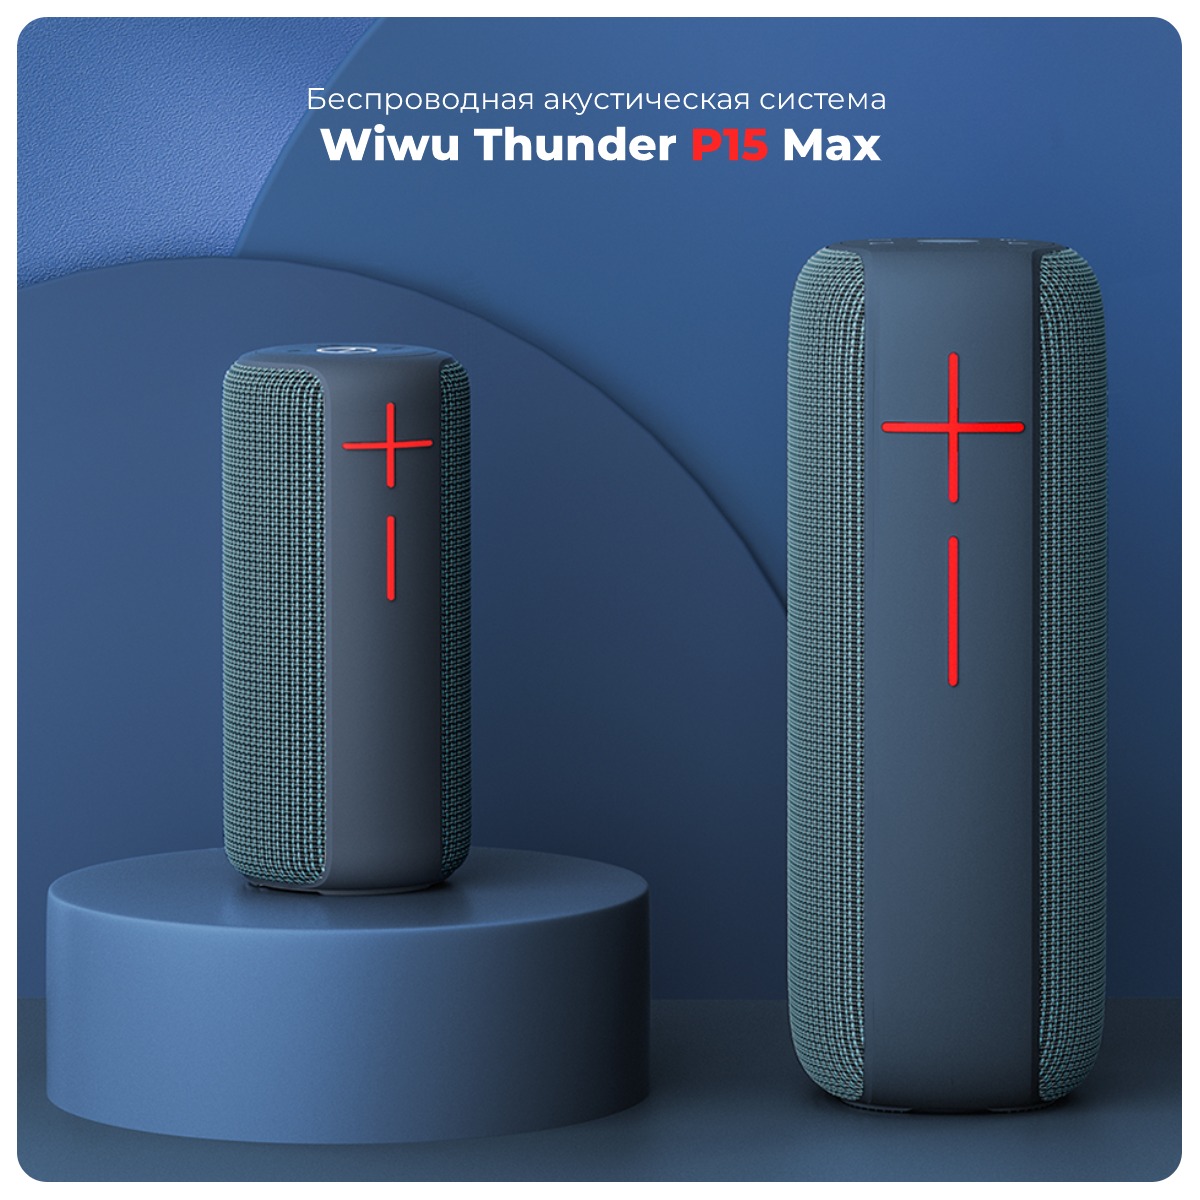 Wiwu-Thunder-P15-Max-01